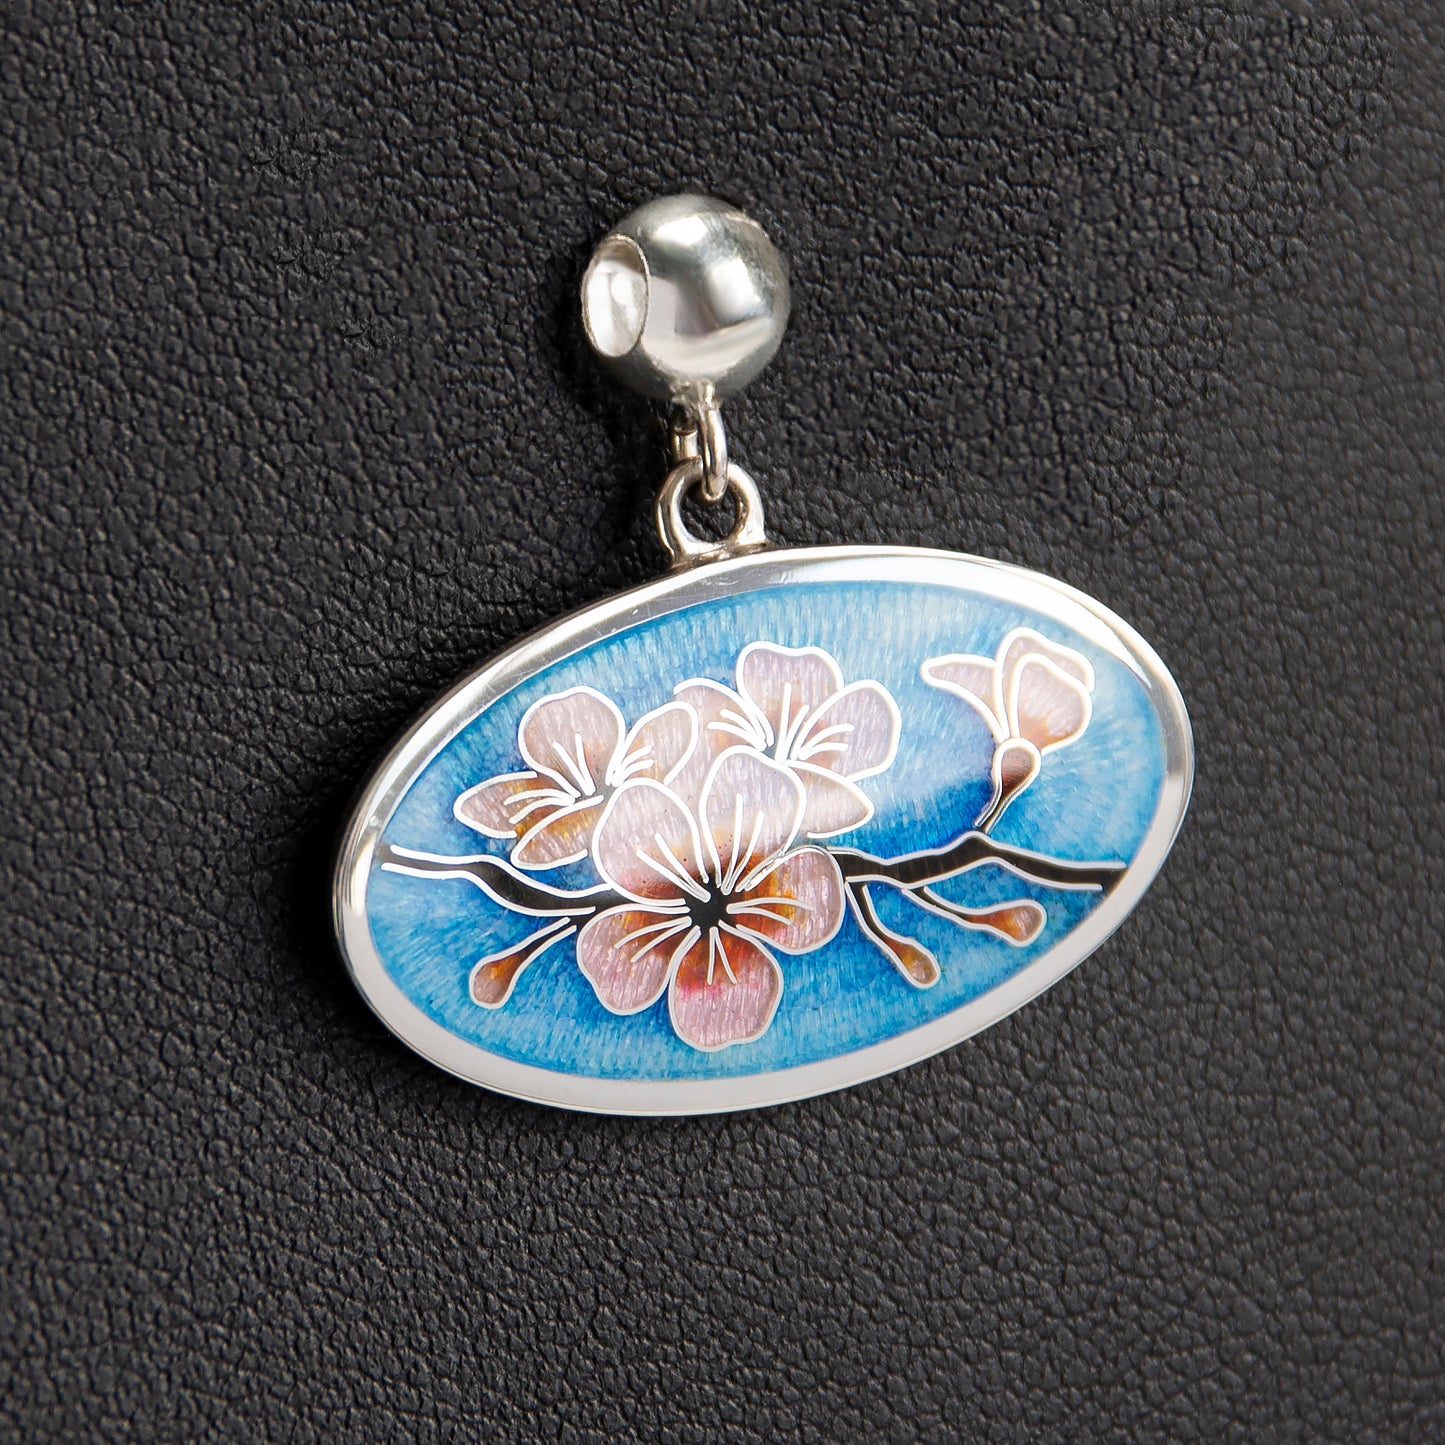 "Sakura" Cloisonne Enamel Necklace And Earrings Jewelry Set